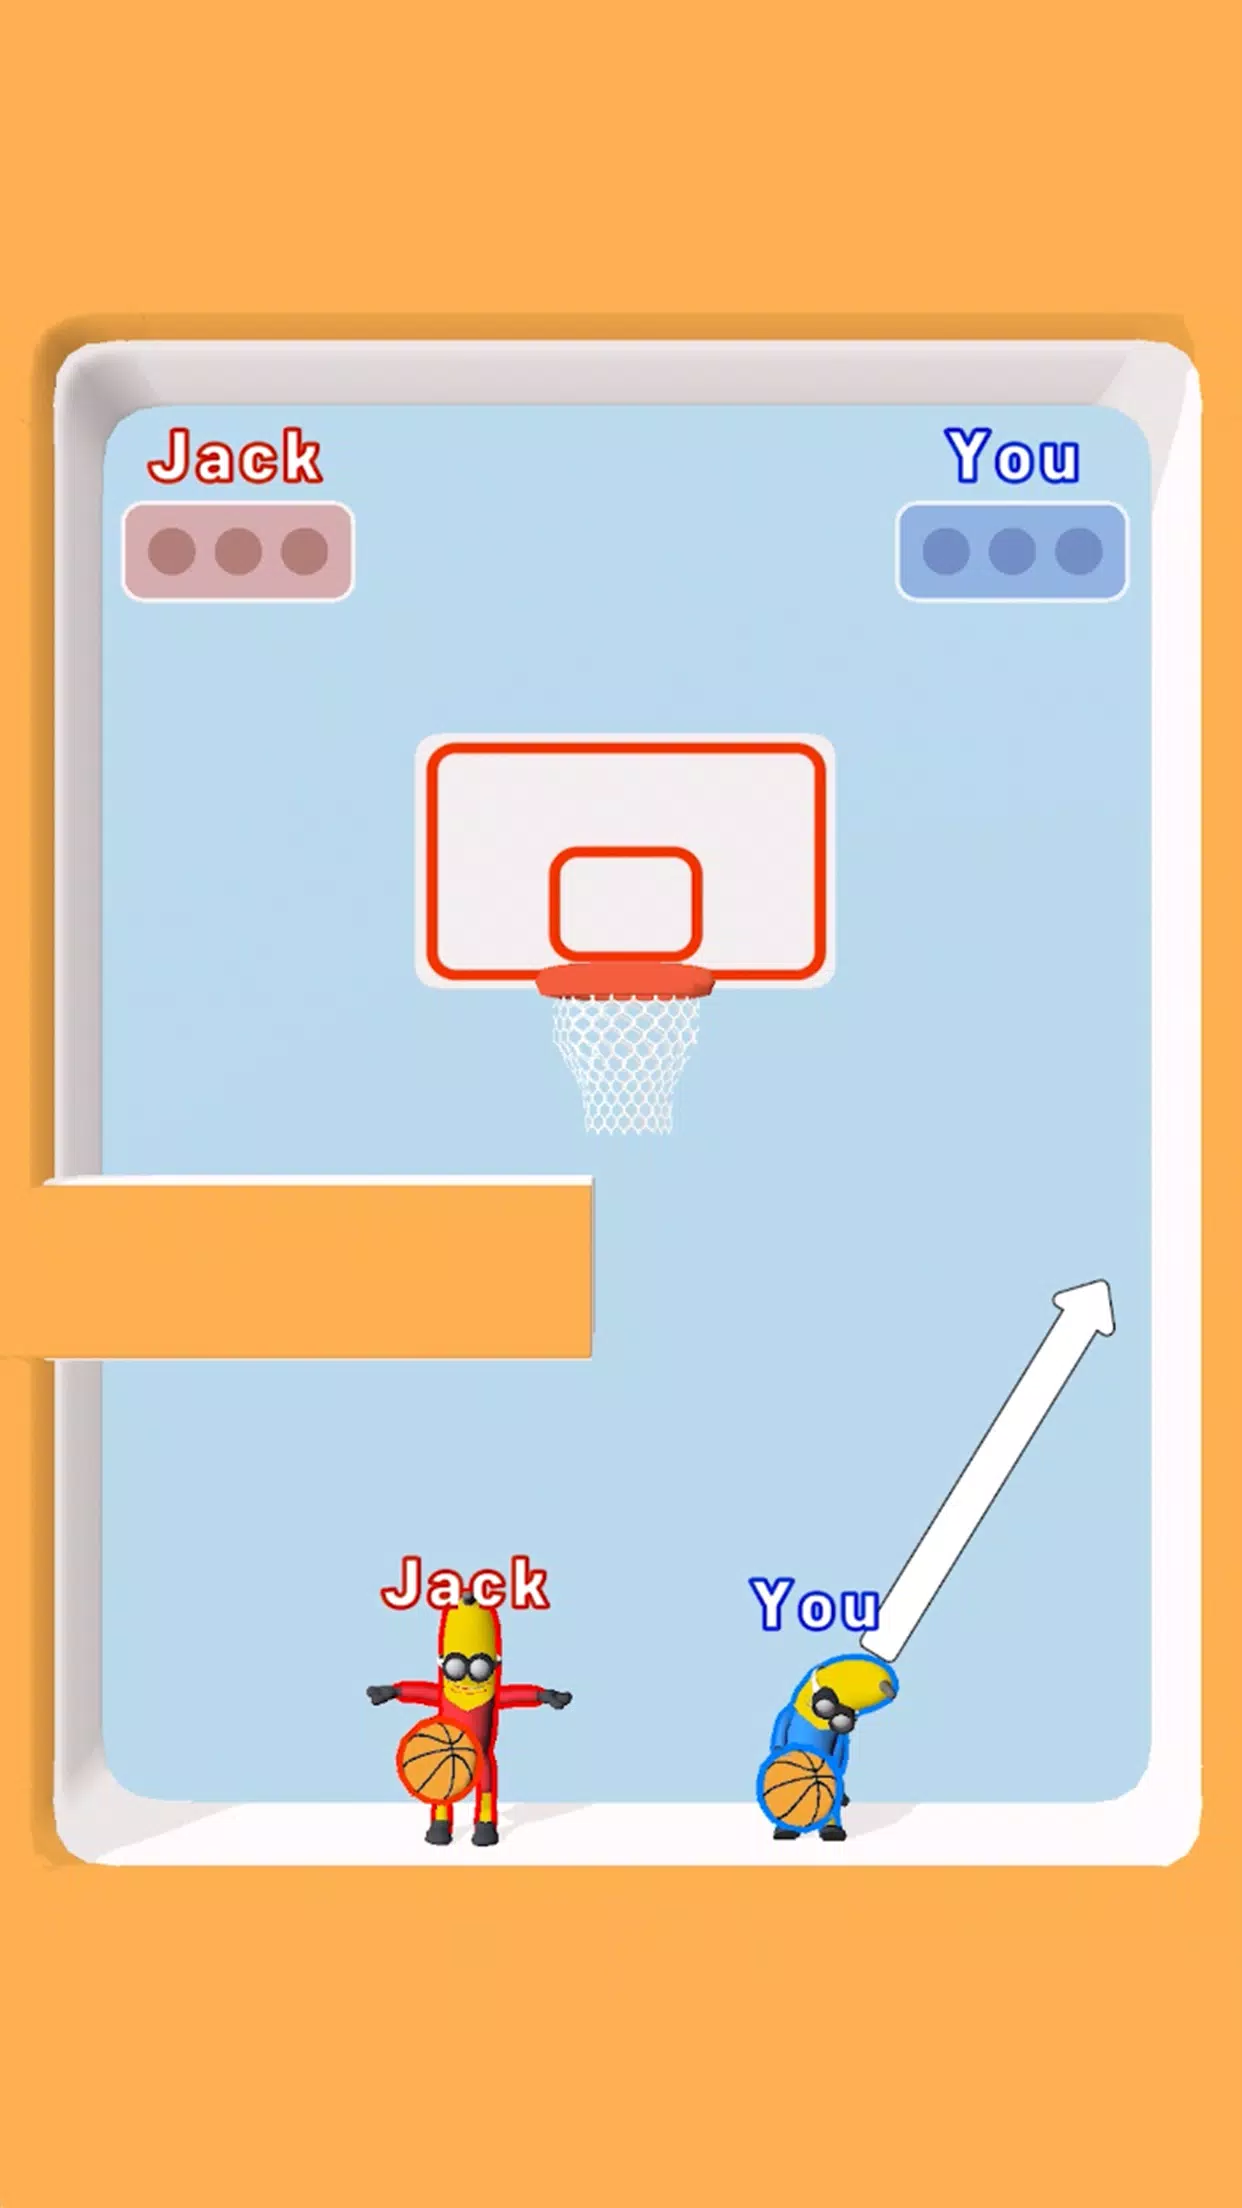 Basket Random for Android - Free App Download